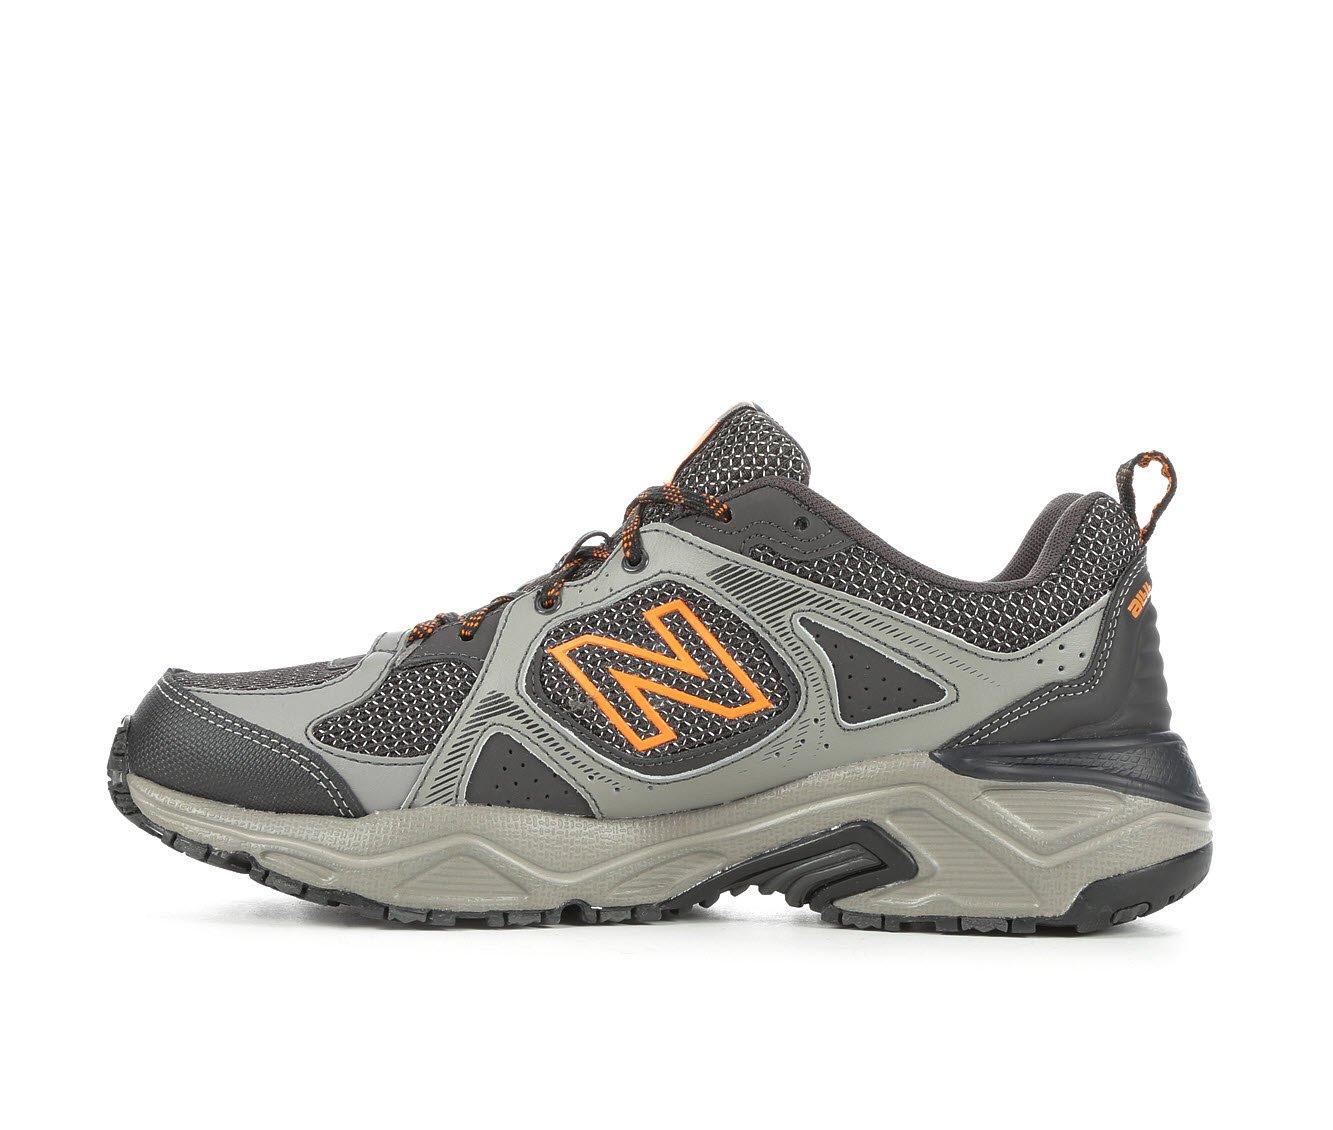 Men's New Balance MT481 Trail Running Shoes Shoe Carnival